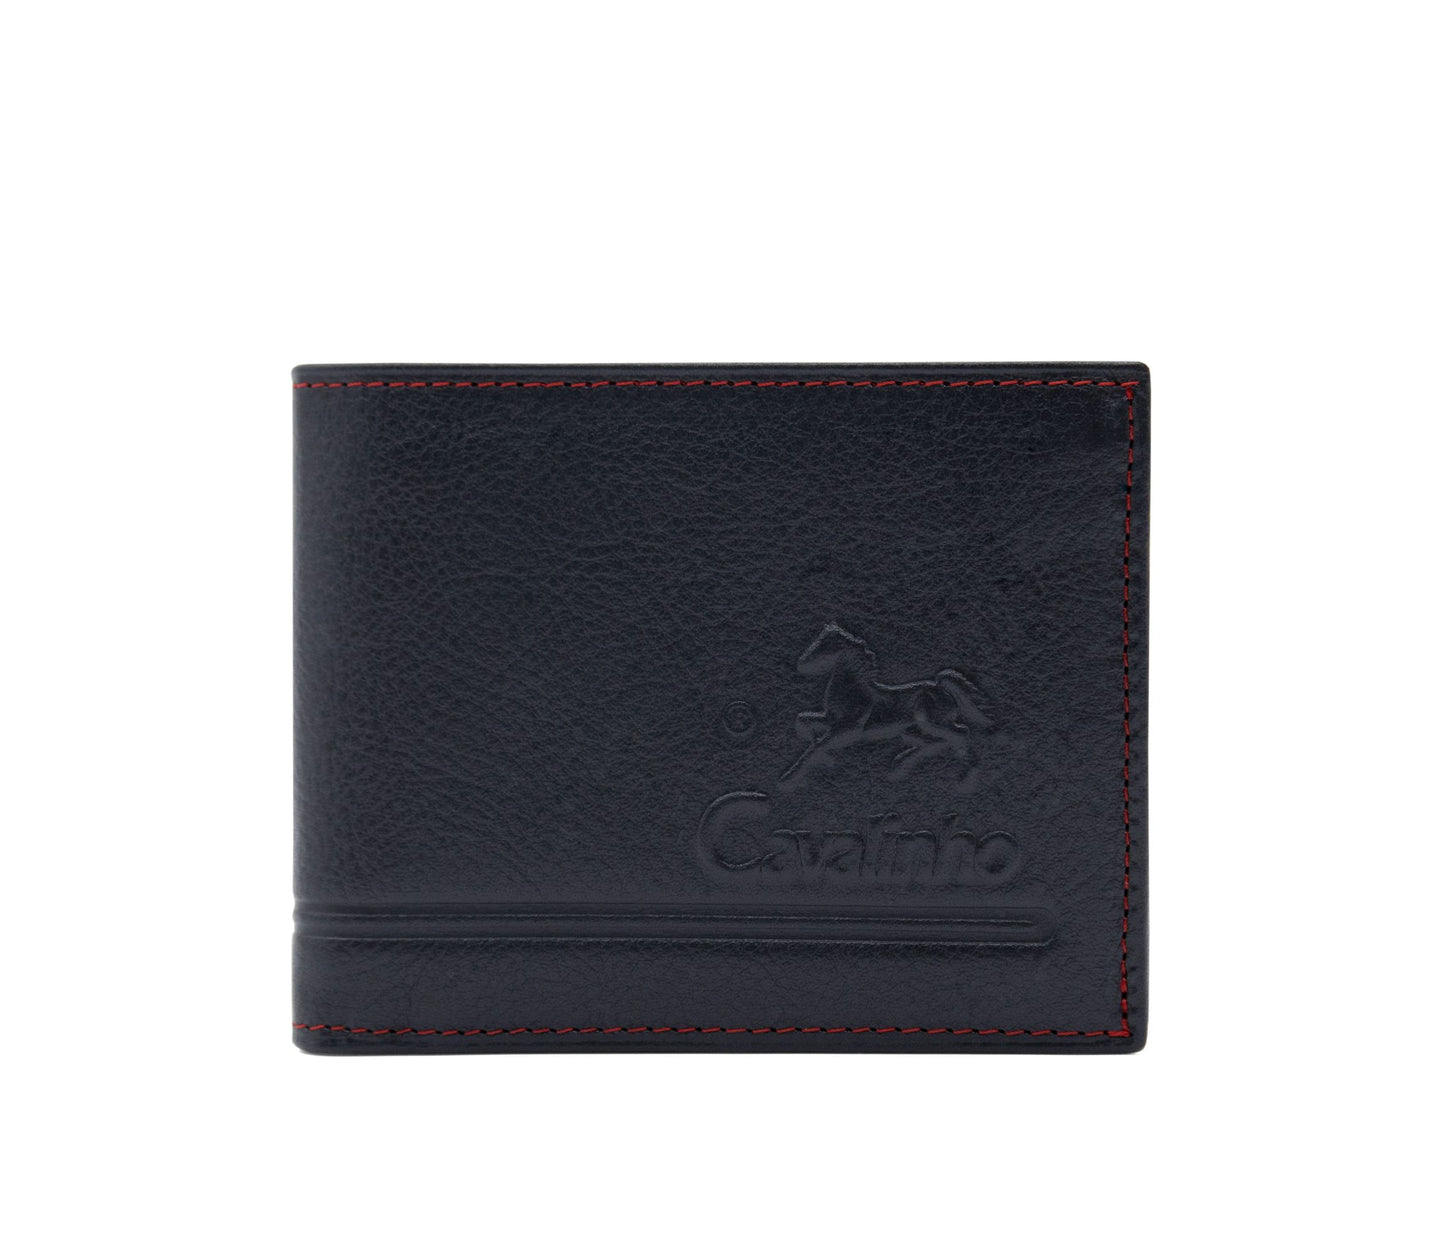 Cavalinho Men's Trifold Leather Wallet - Navy - 28640508.03_1_b06f5321-8d3f-4380-9145-d708f520d137